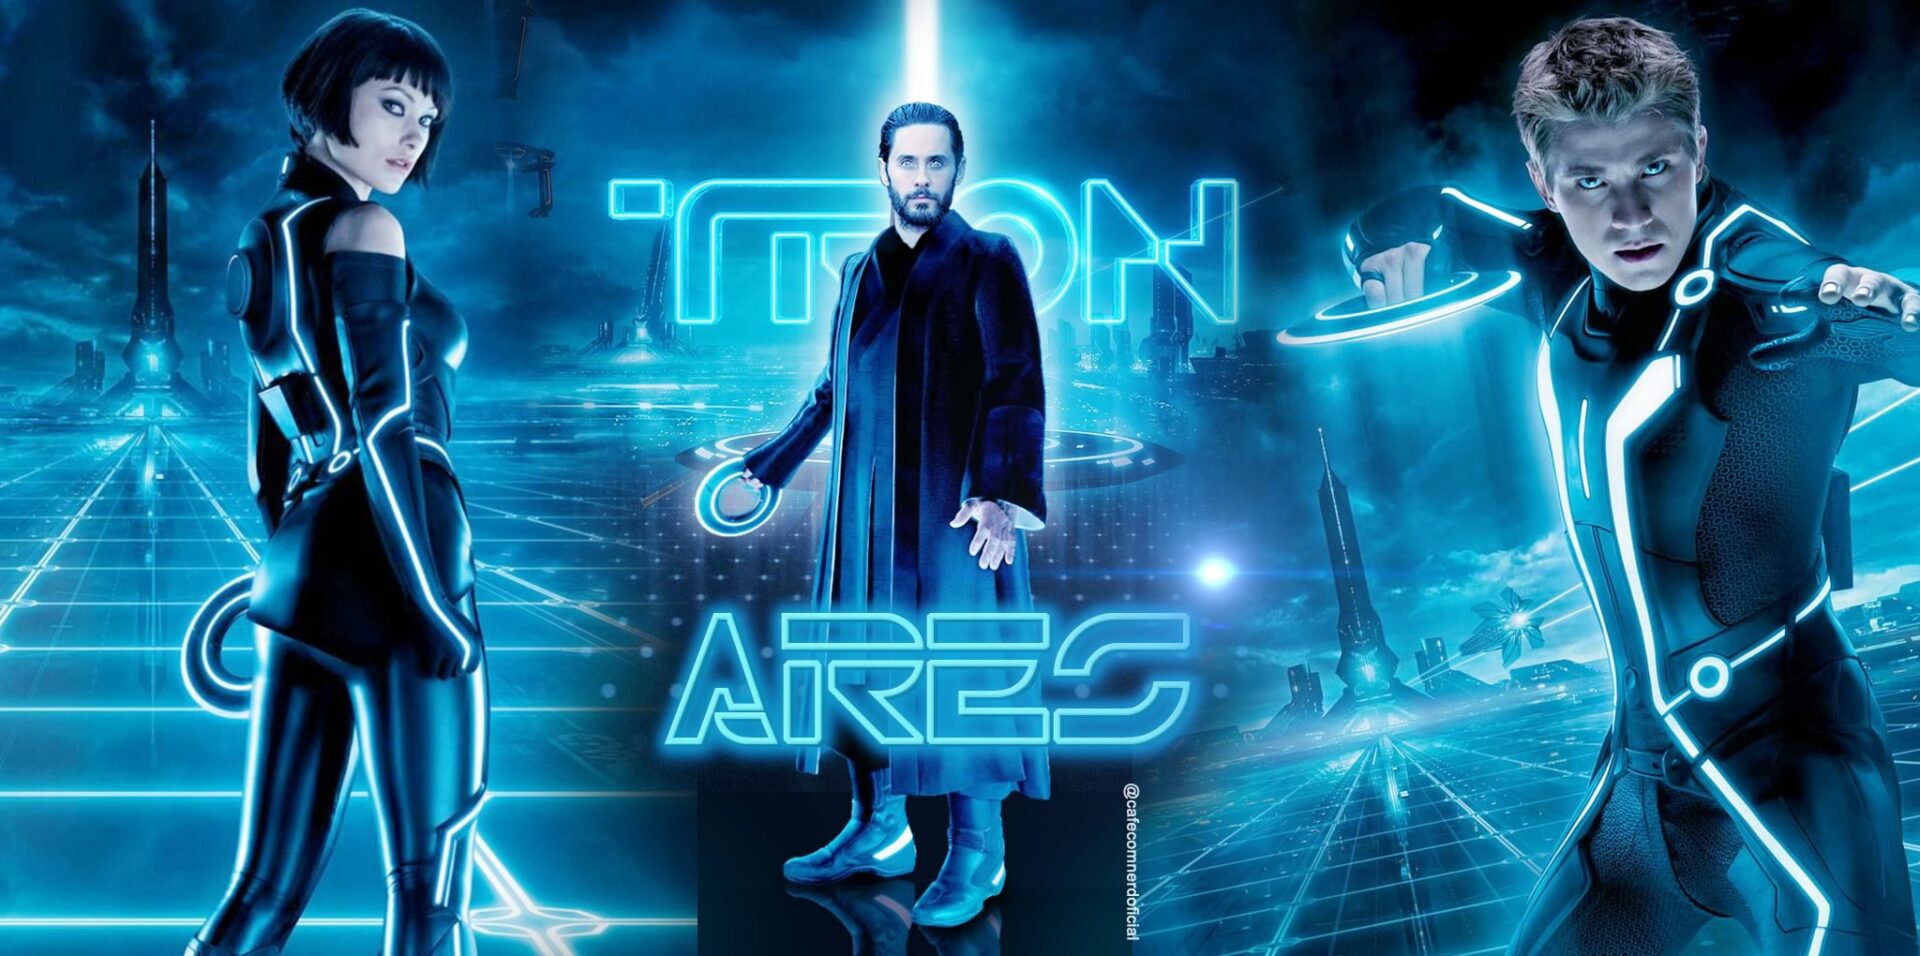 Film Tron: Ares, parla il regista Joachim Rønning: trama, cast e uscita